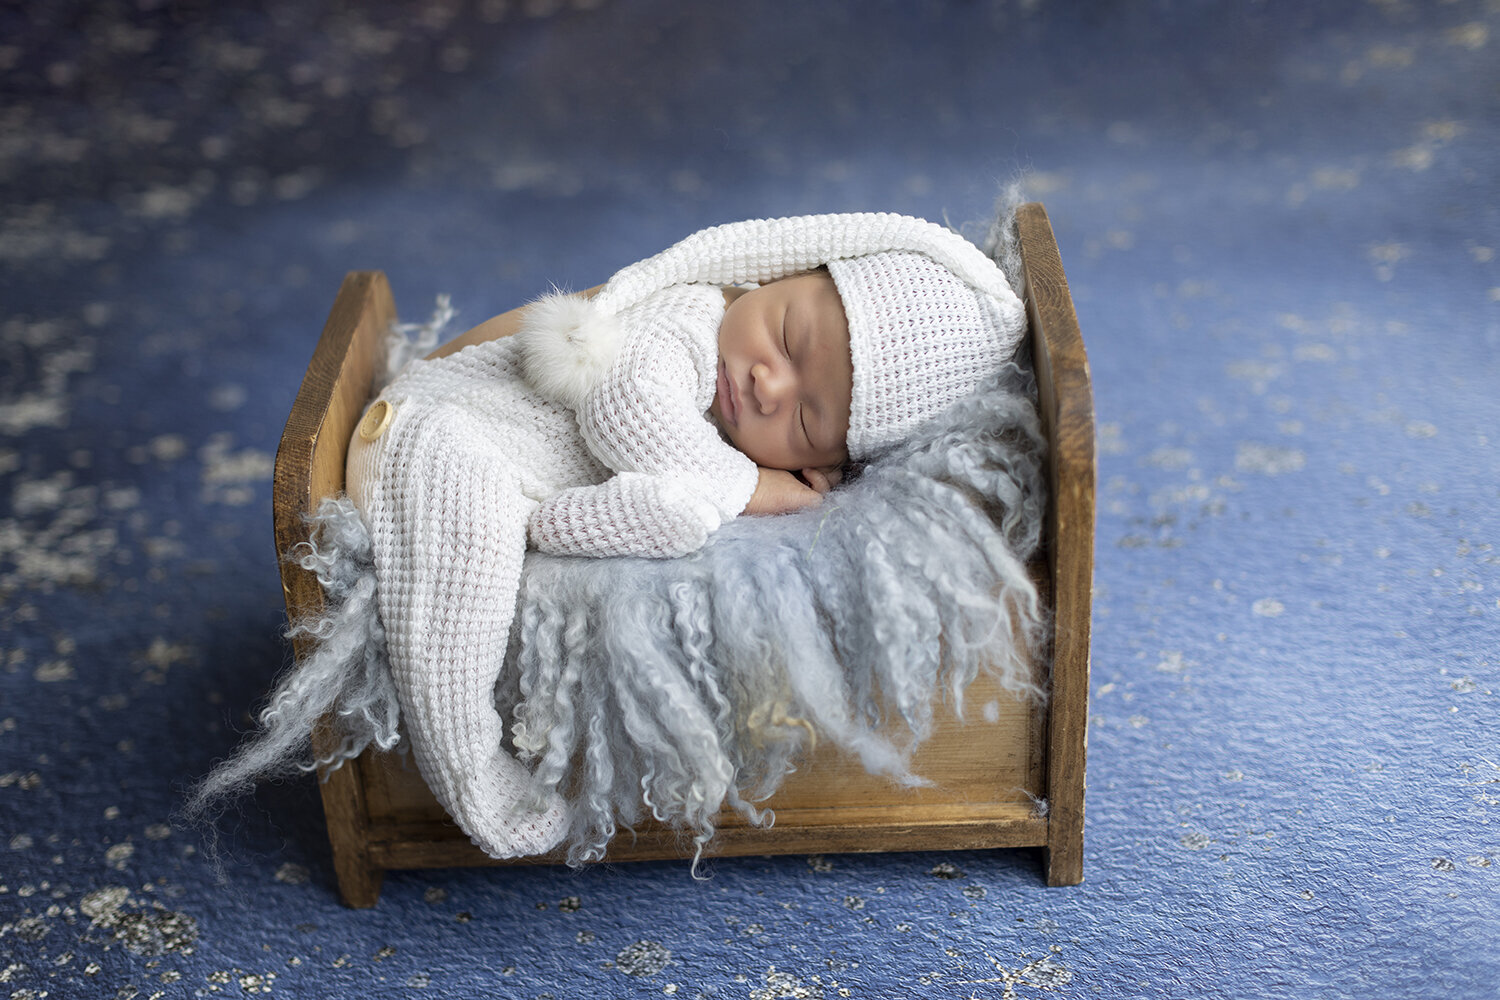 Newborn boy wears white sleep suit poses on tiny bed